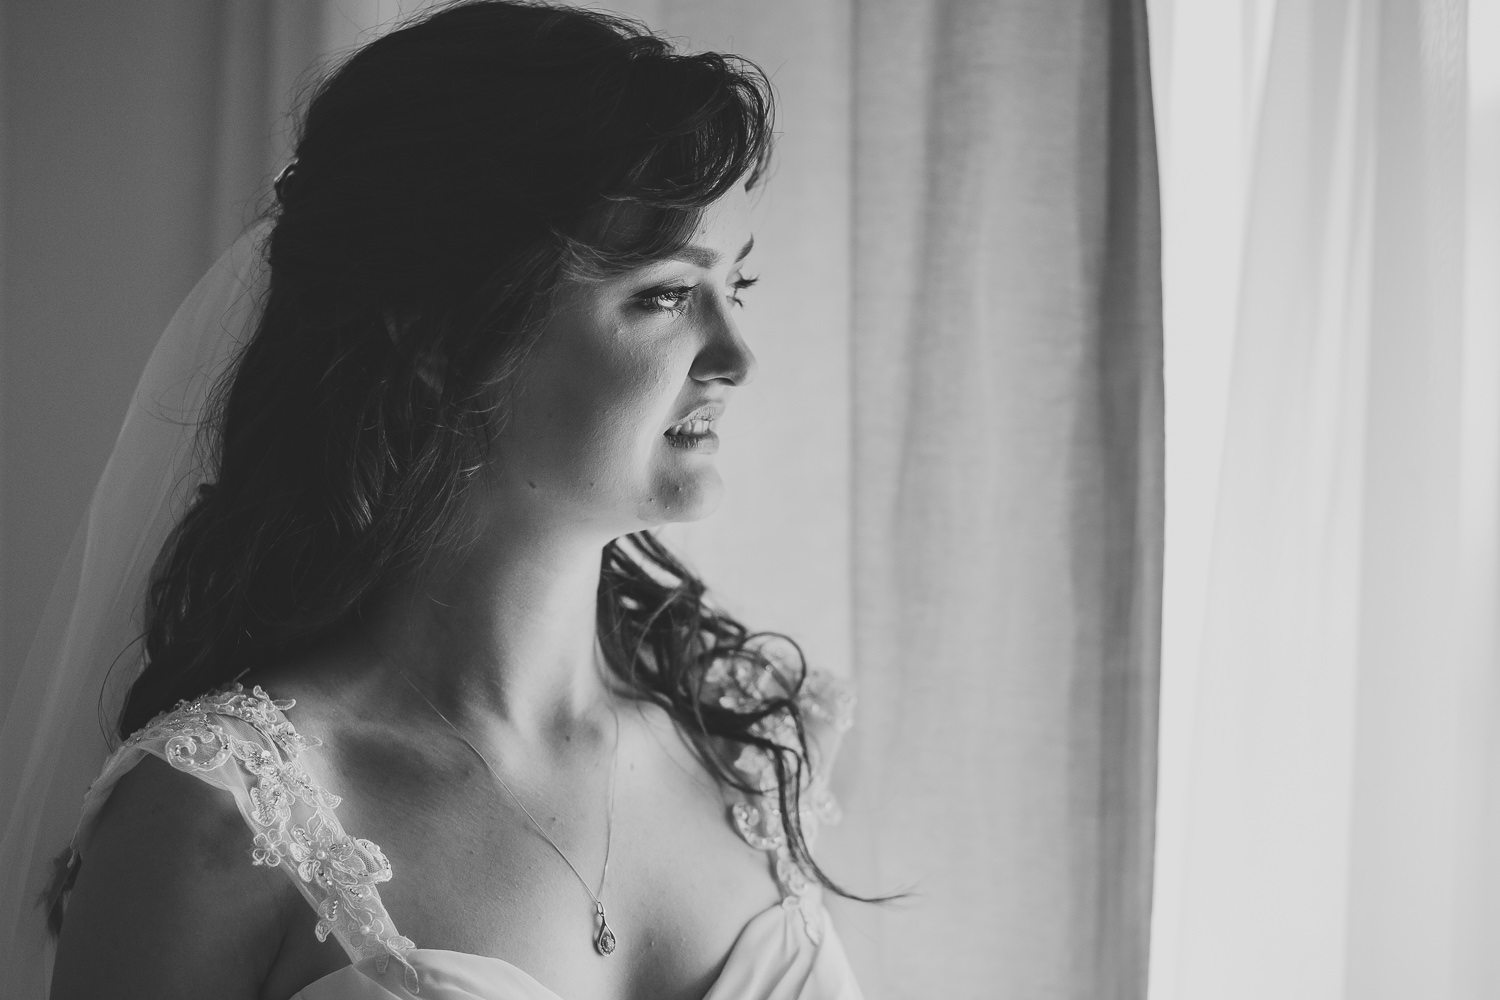 Black and white portrait photo of a bride